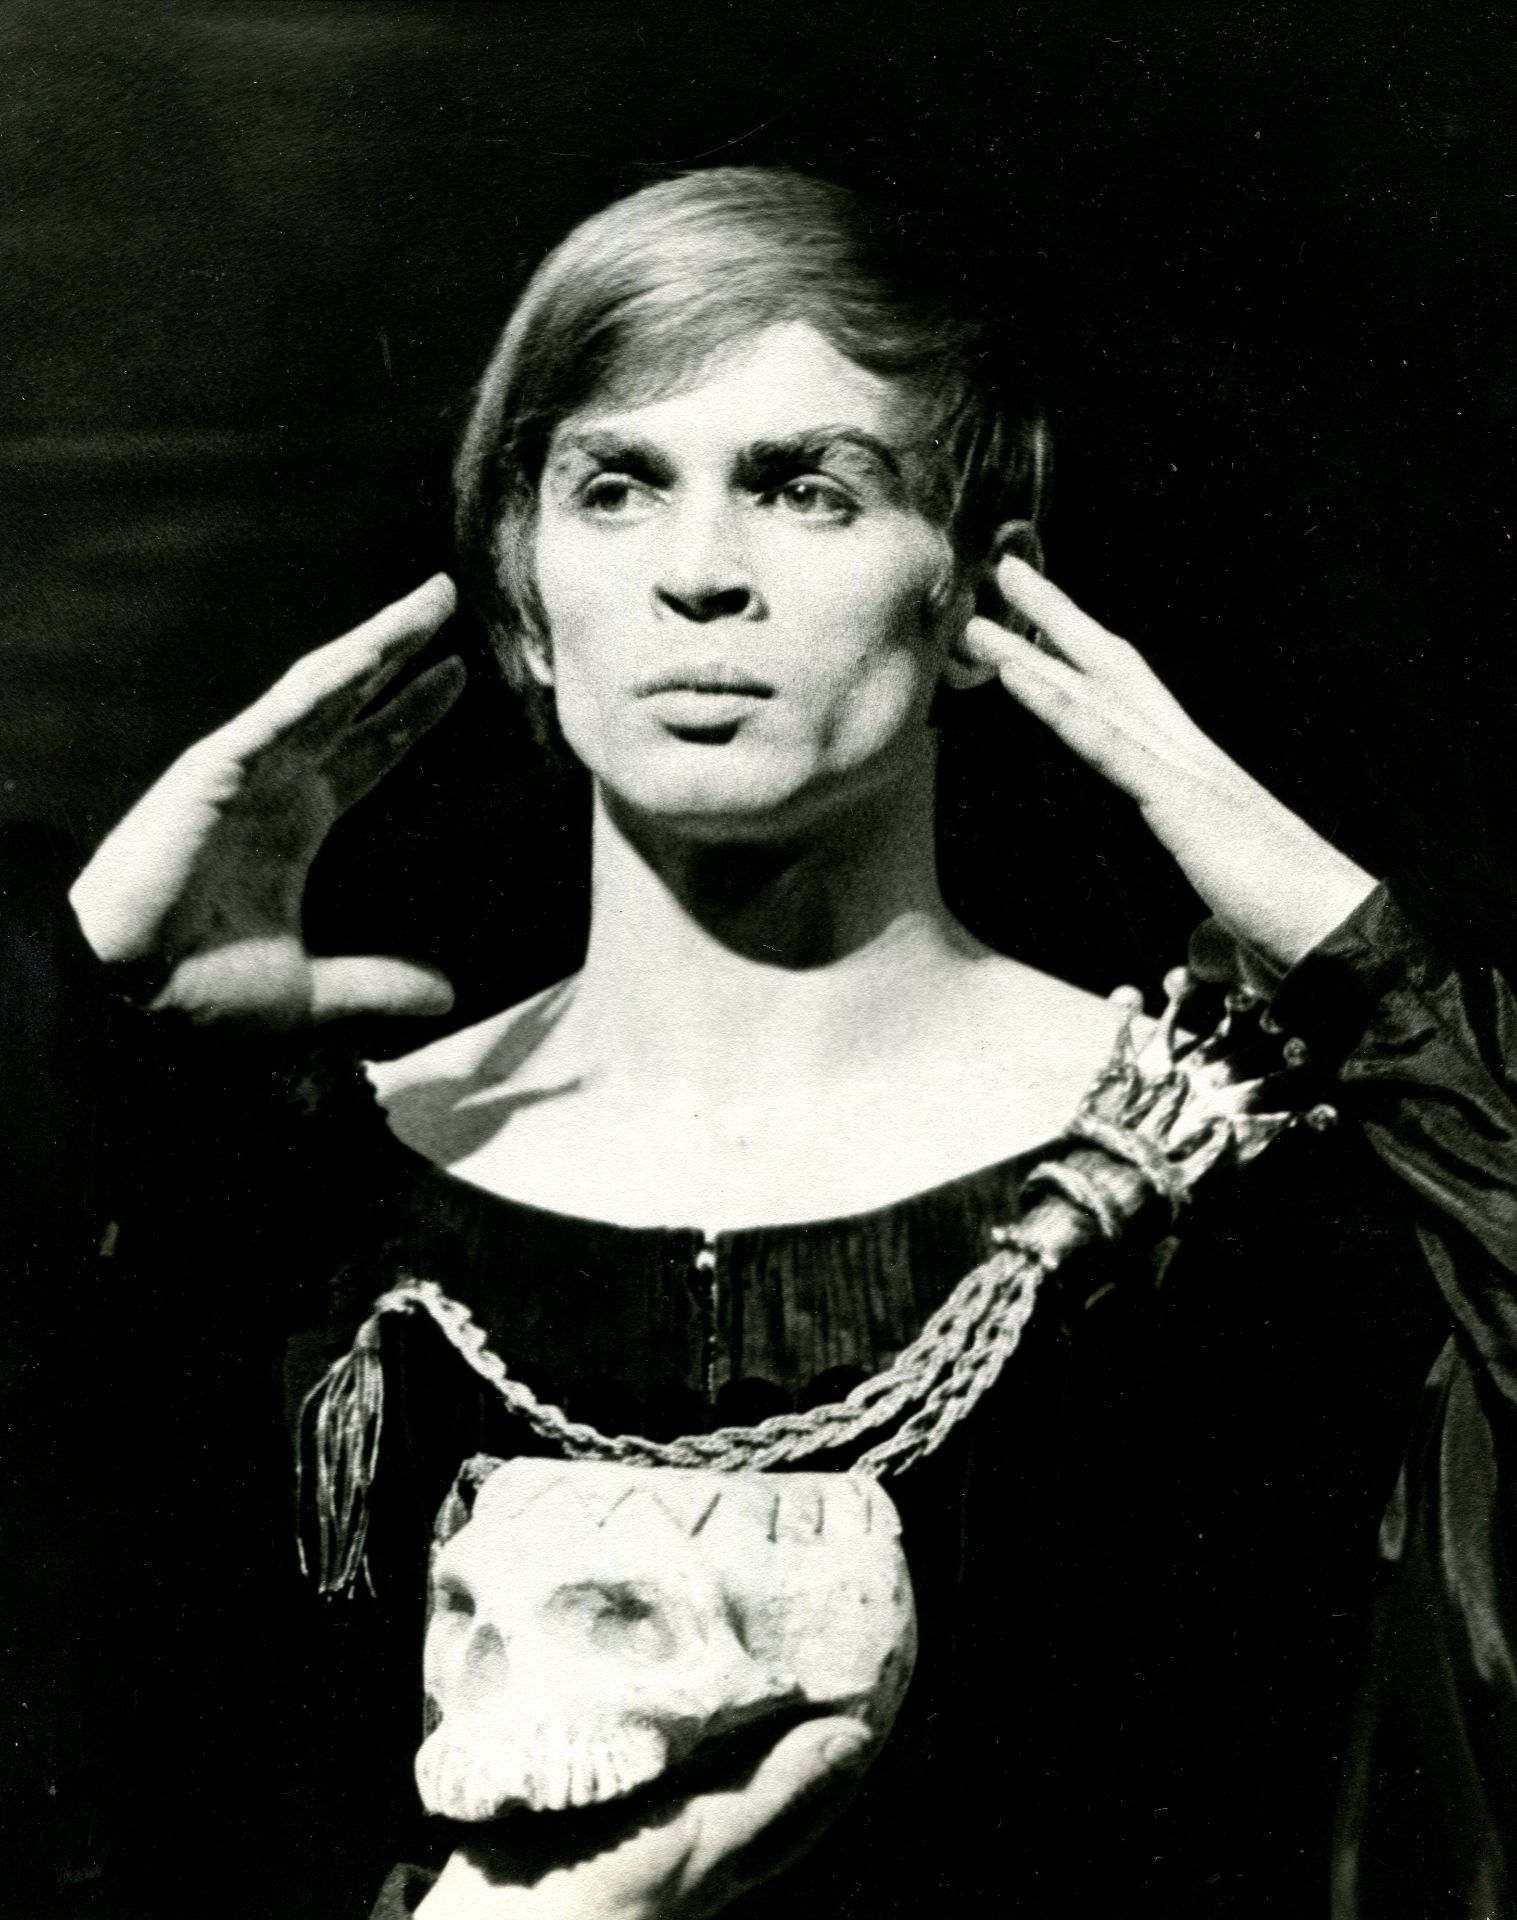 [FONTEYN & NUREYEV]: [FONTEYN MARGOT] (1919-1991) English ballerina & [NUREYEV RUDOLF] (1938-1993) - Image 17 of 17